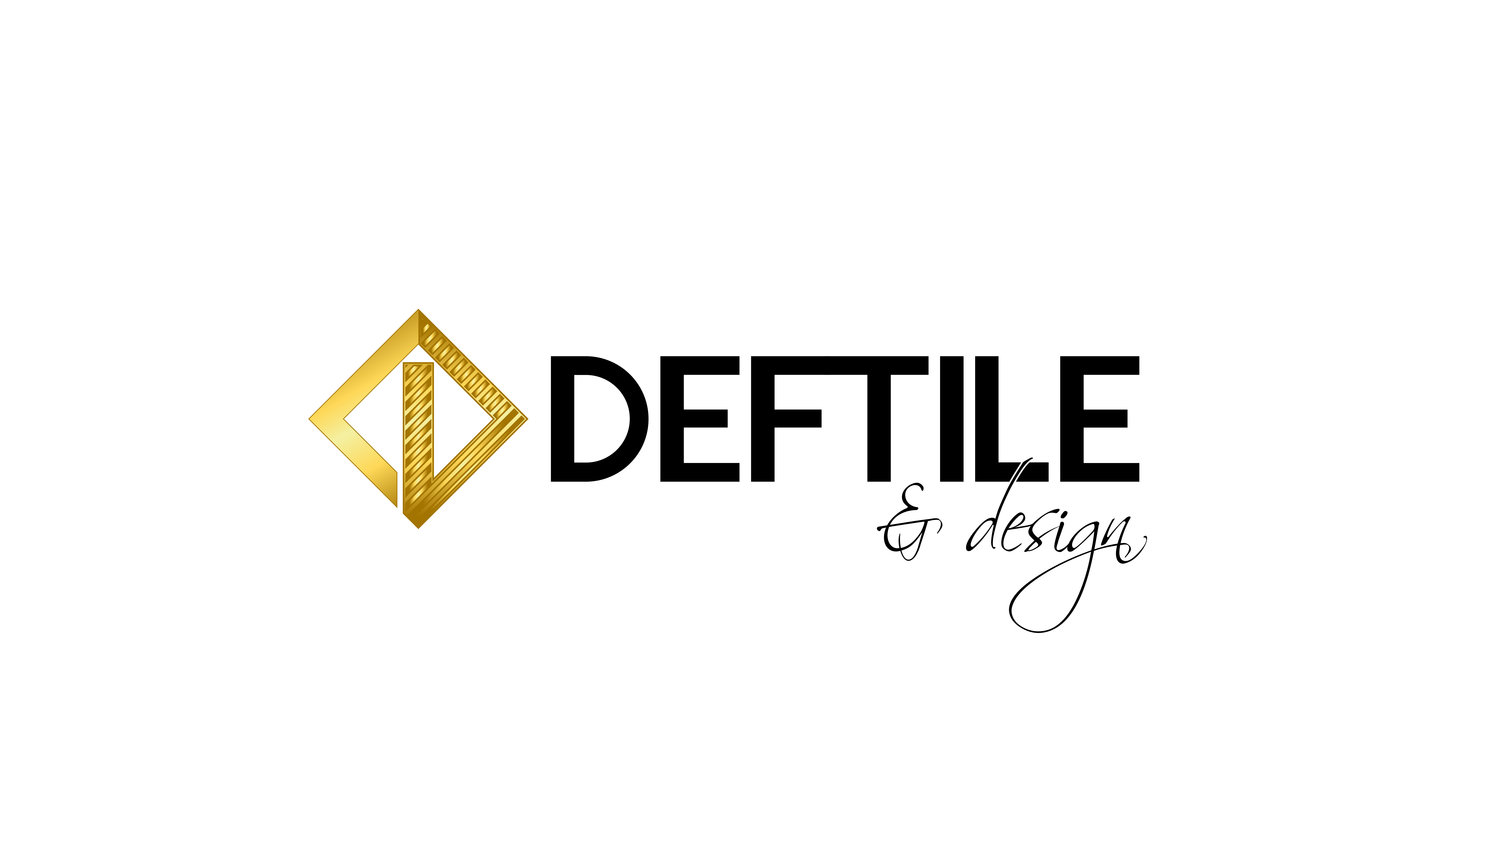 Deftile & Design LLC 